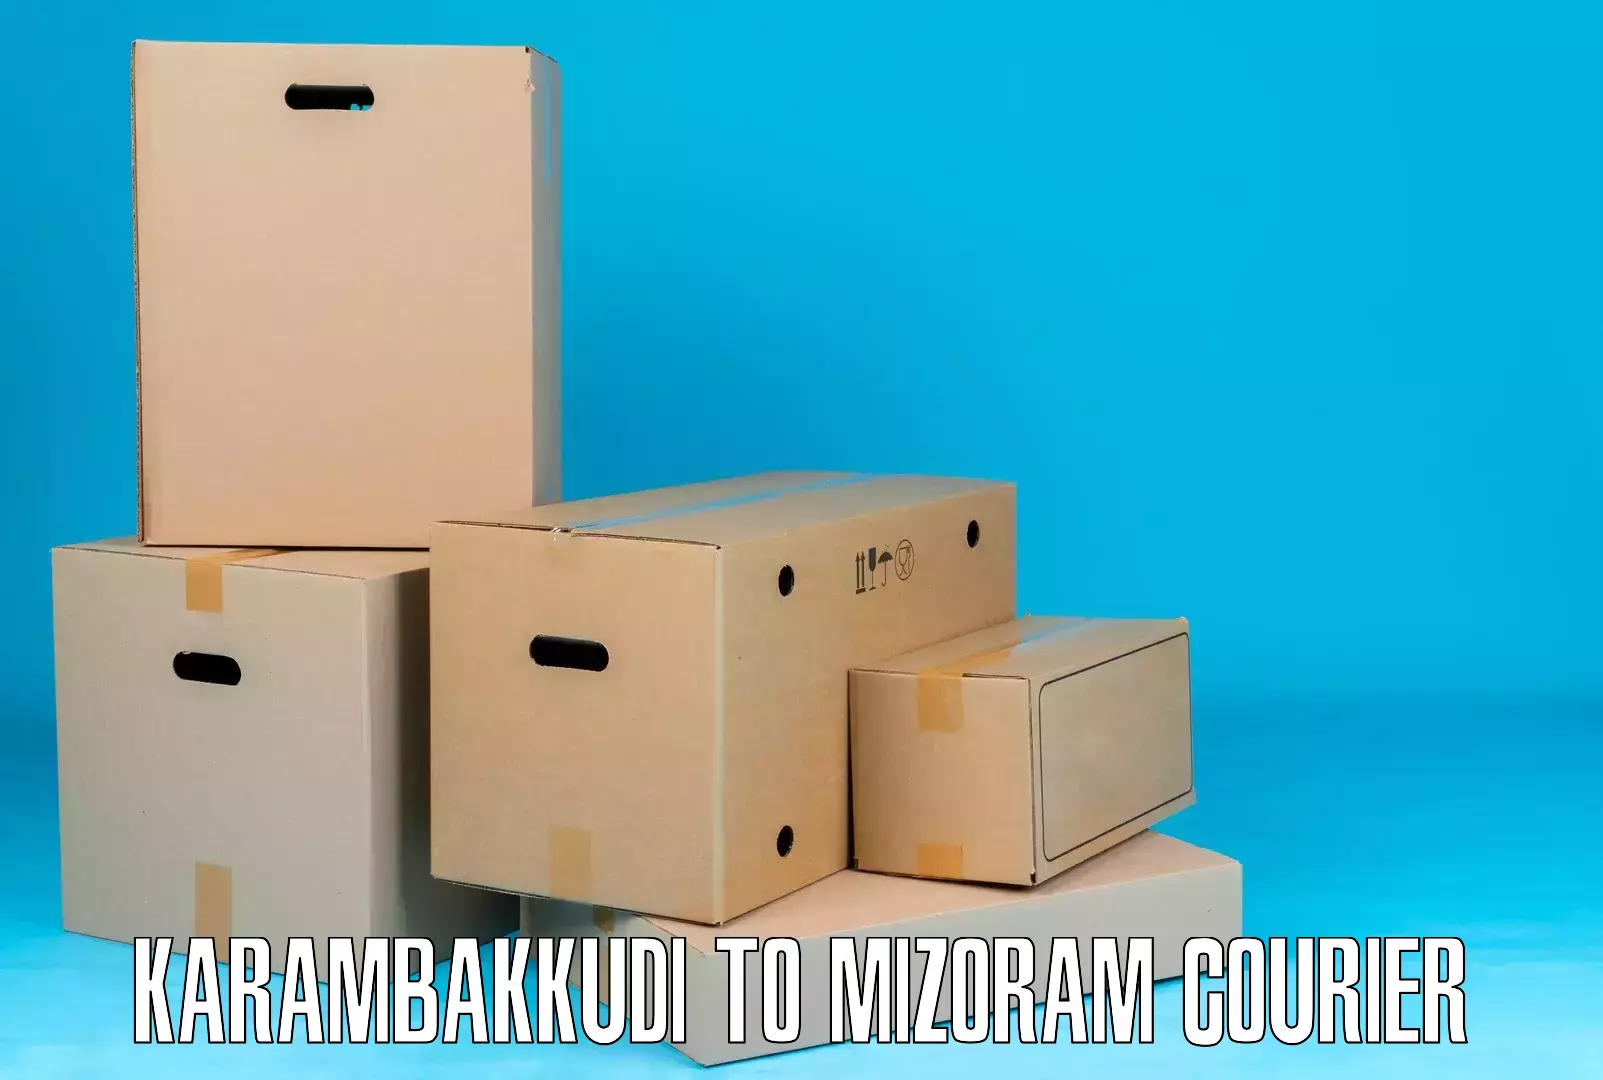 Modern courier technology Karambakkudi to Mizoram